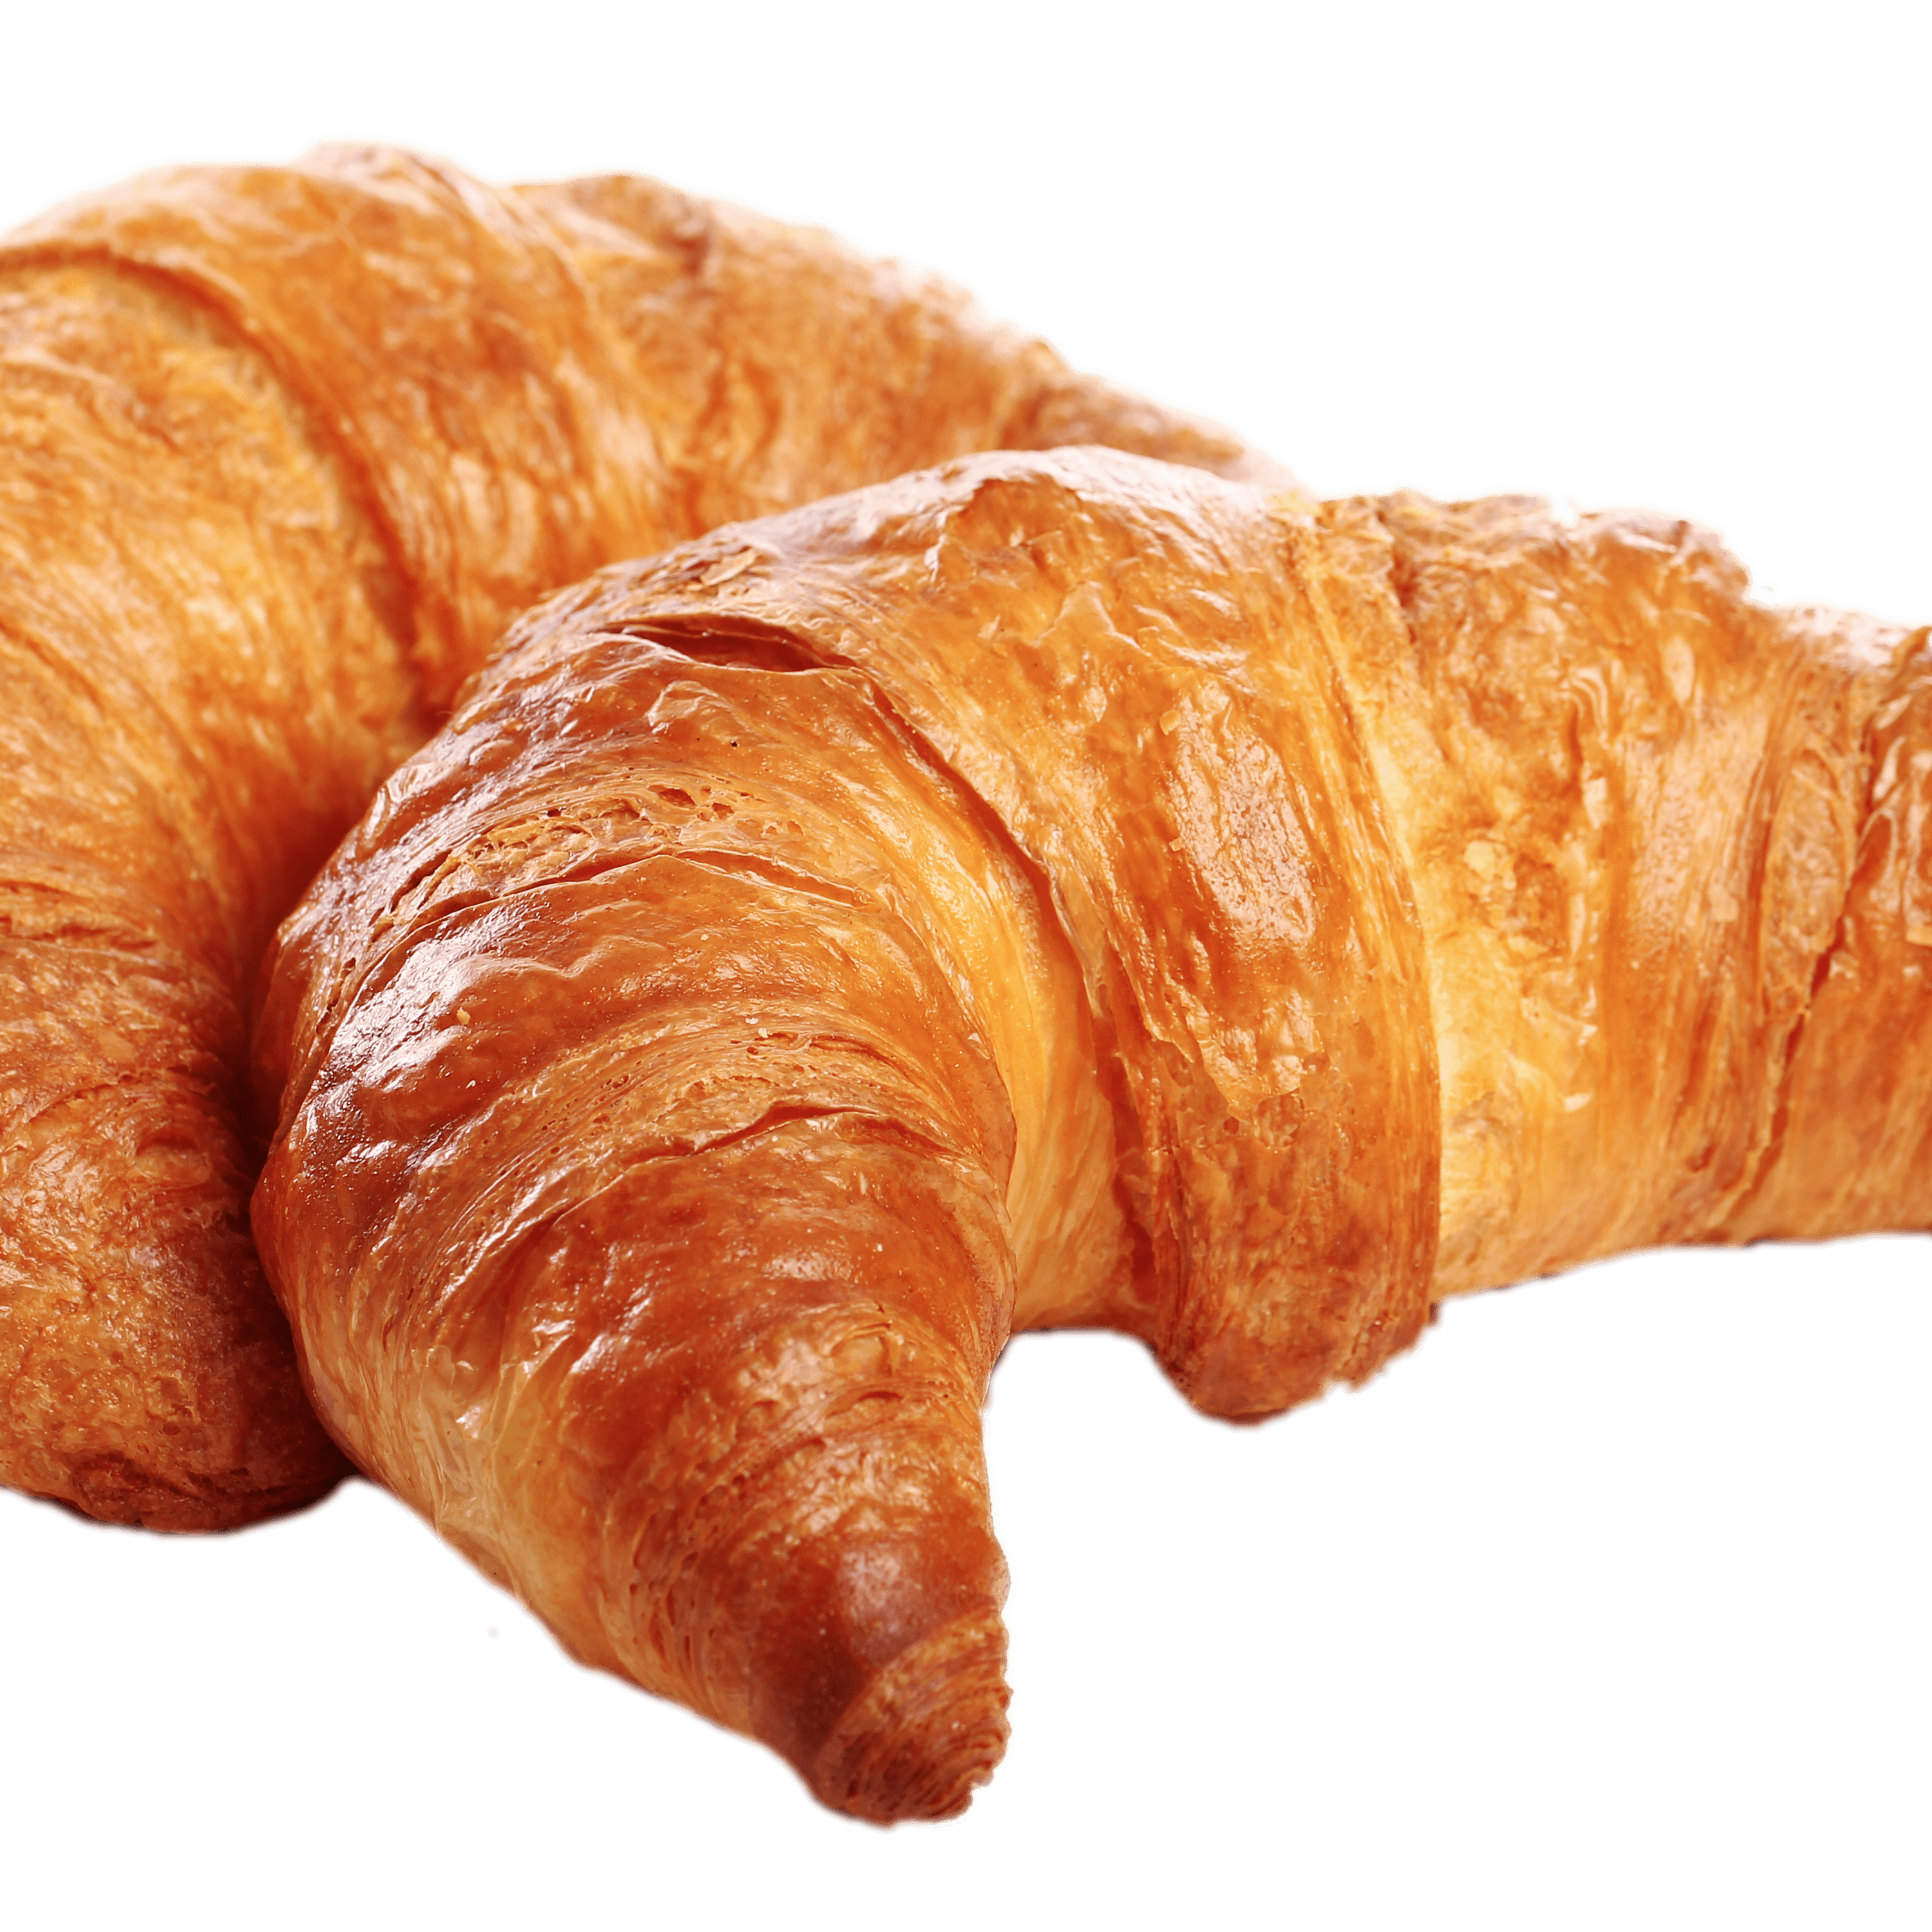 Immagine Trasparente del pane croissant